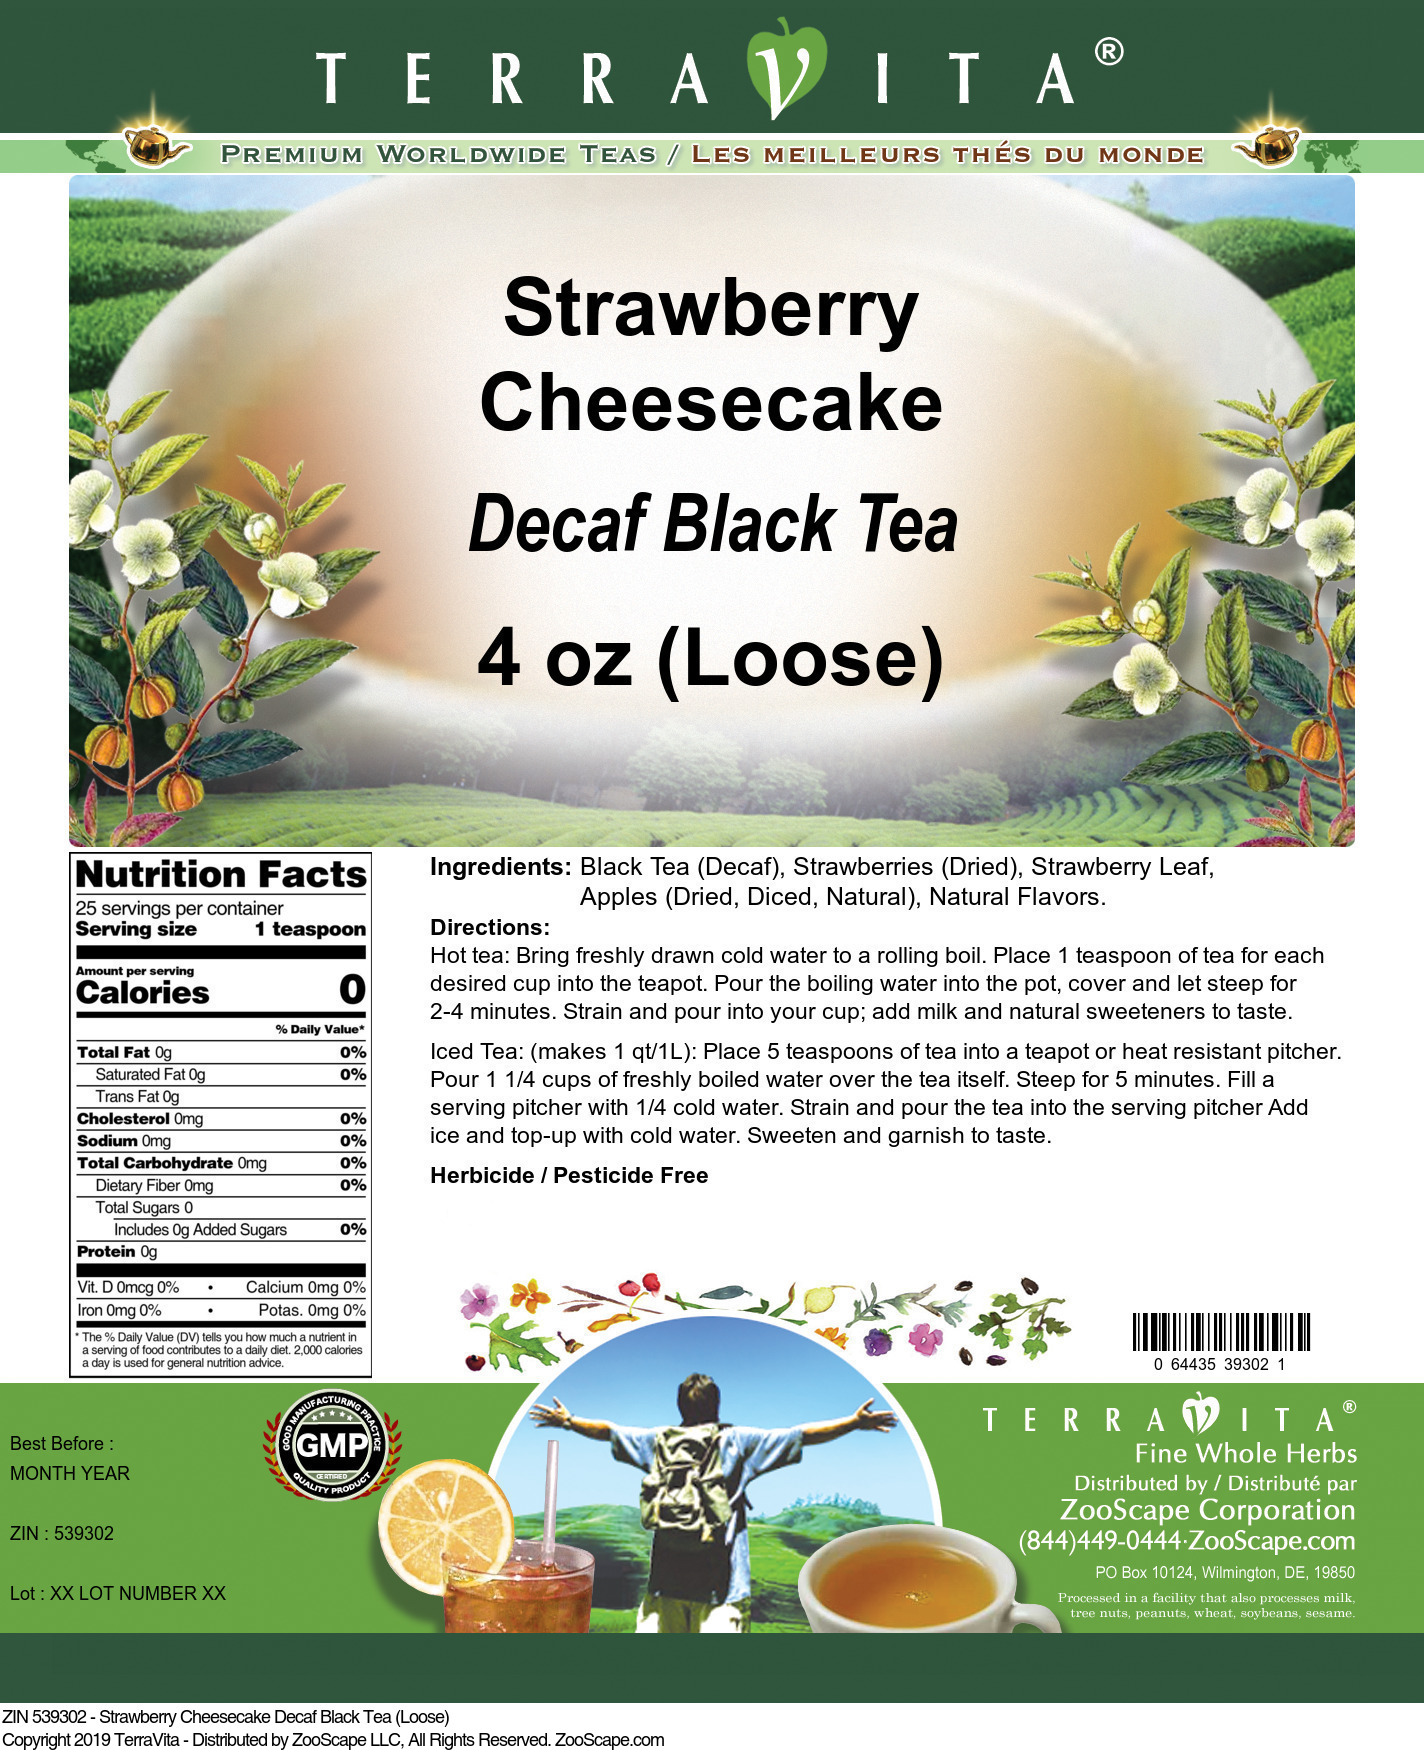 Strawberry Cheesecake Decaf Black Tea (Loose) - Label